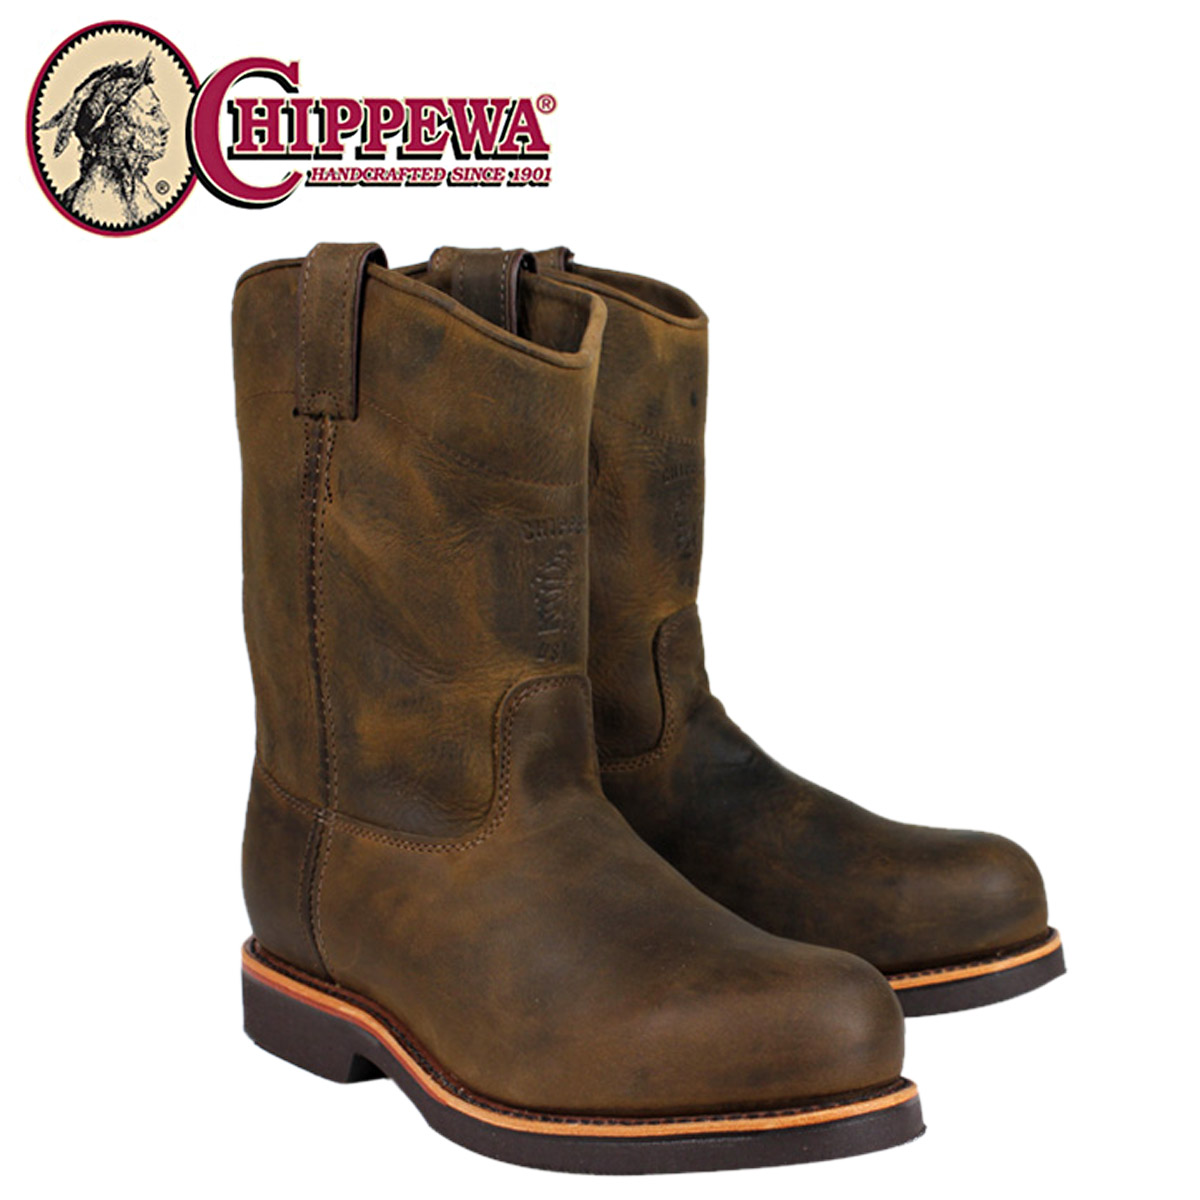 chippewa pull on boots